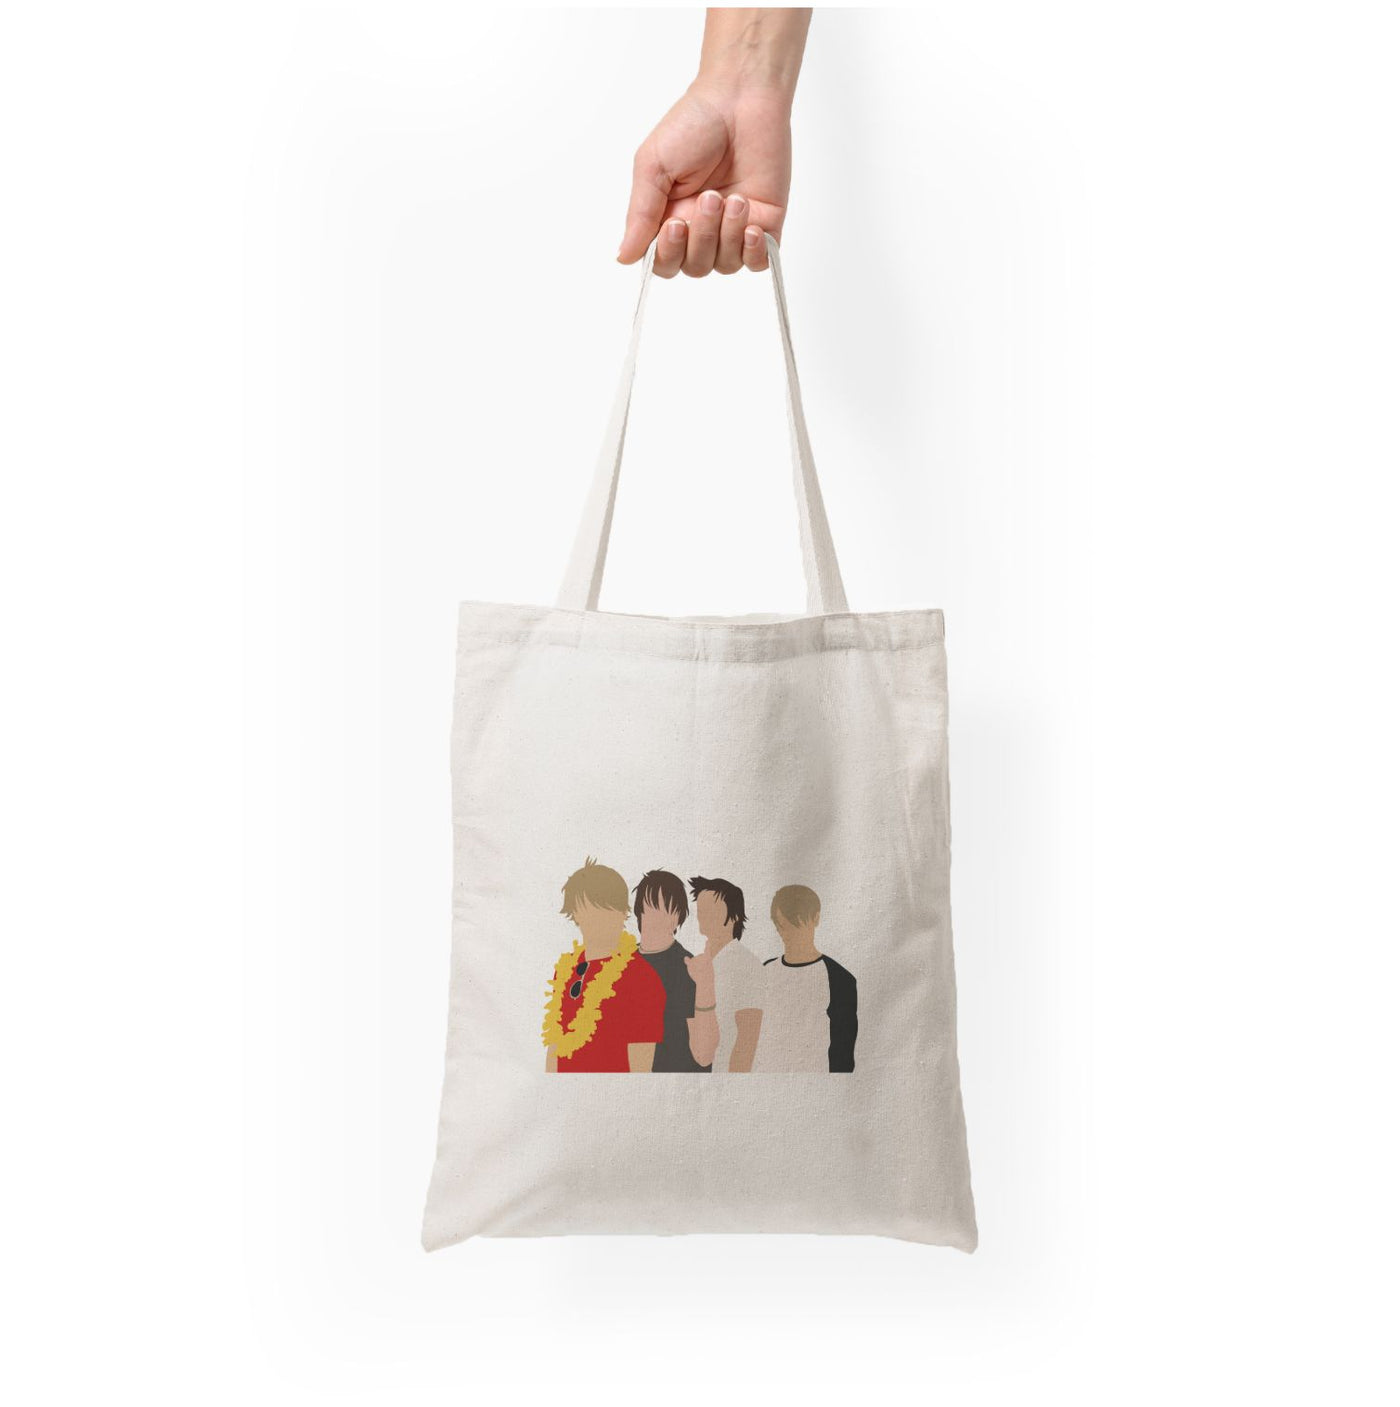 Band Members - McFly Tote Bag